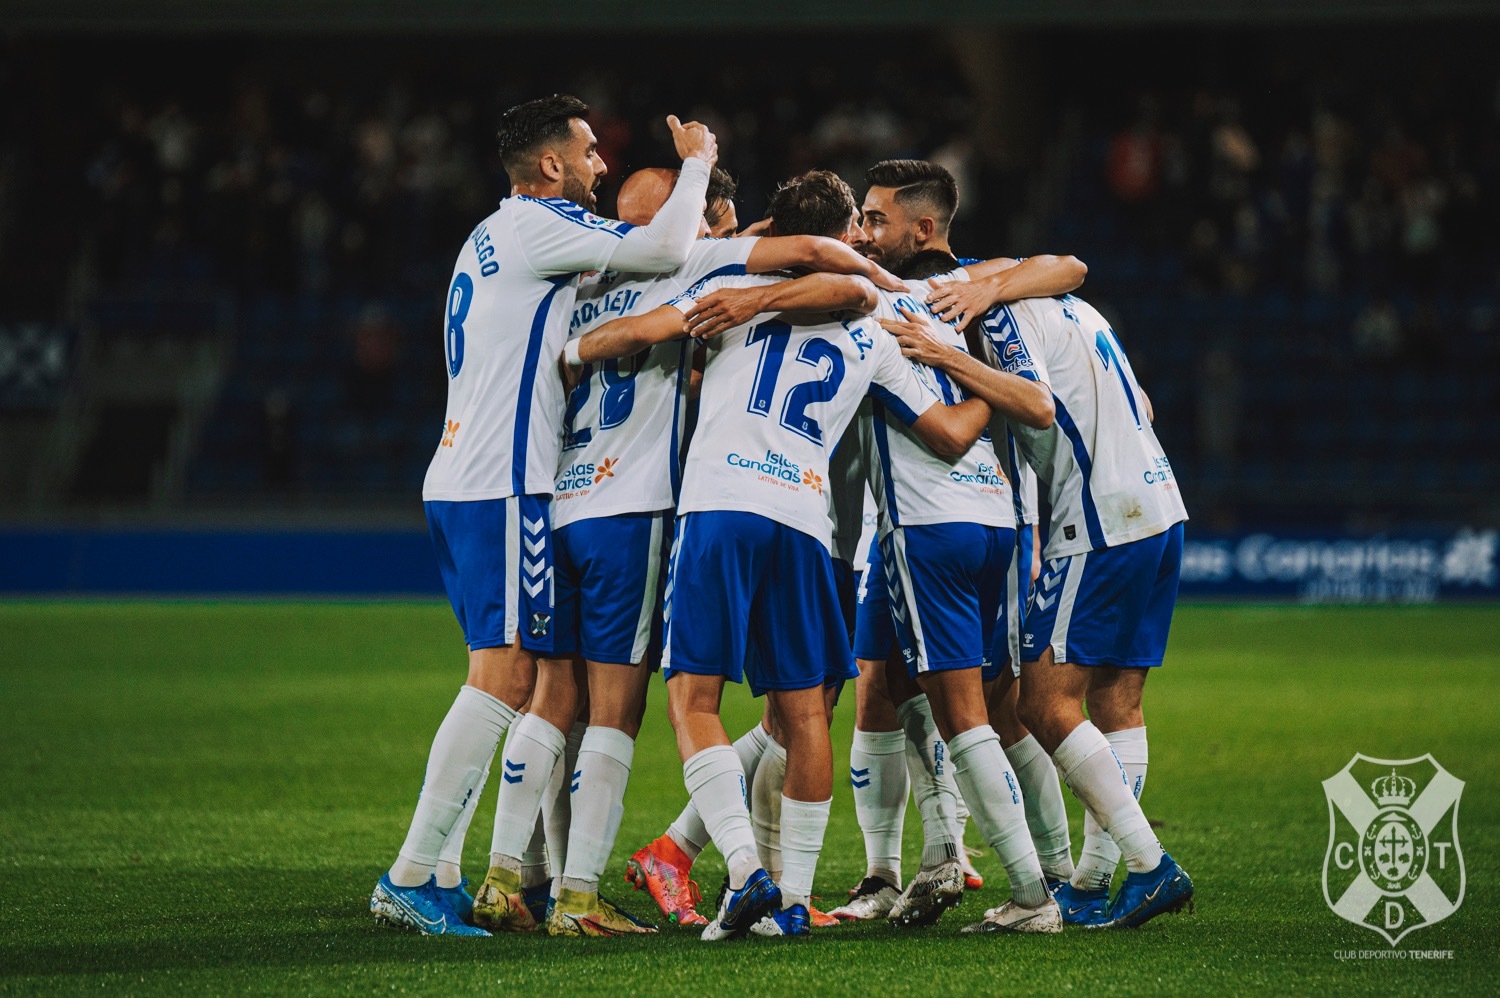 Crónica del CD Tenerife 4-0 Real Oviedo: "El Tenerife vuelve a maravillar"